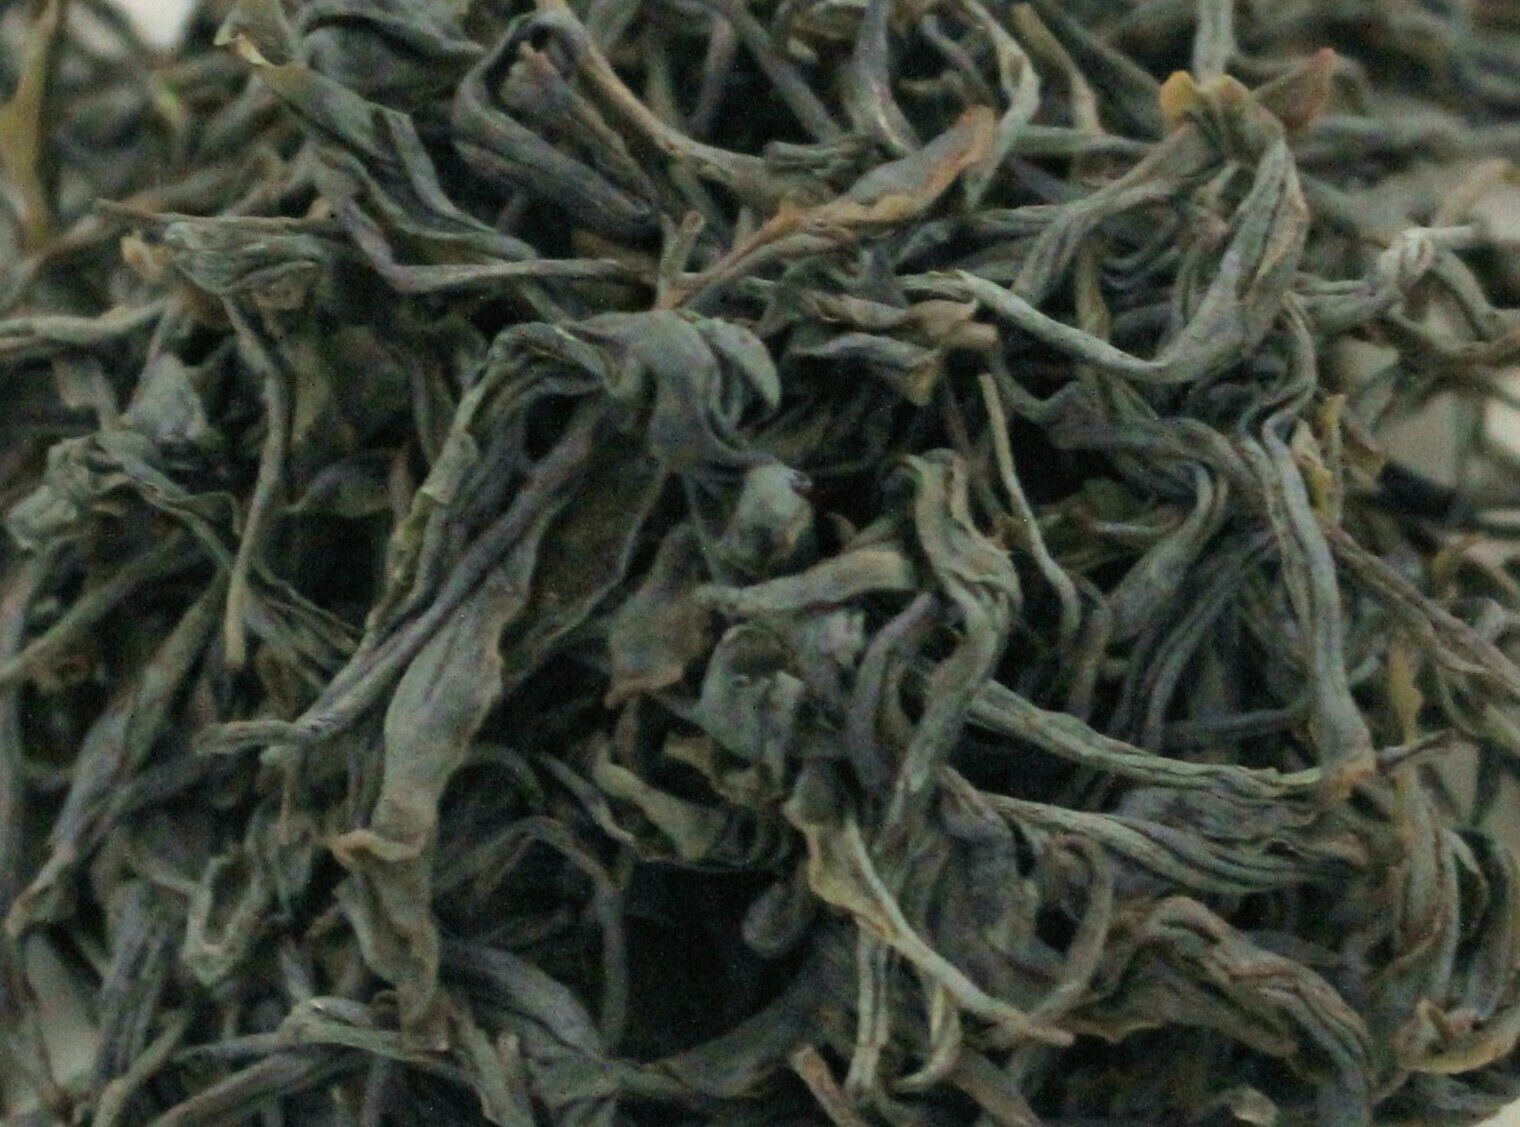 Teas2u Korea Jirisan Artisan Organic 'Yu Tea' Loose Leaf Green Tea -20 grams - $11.95